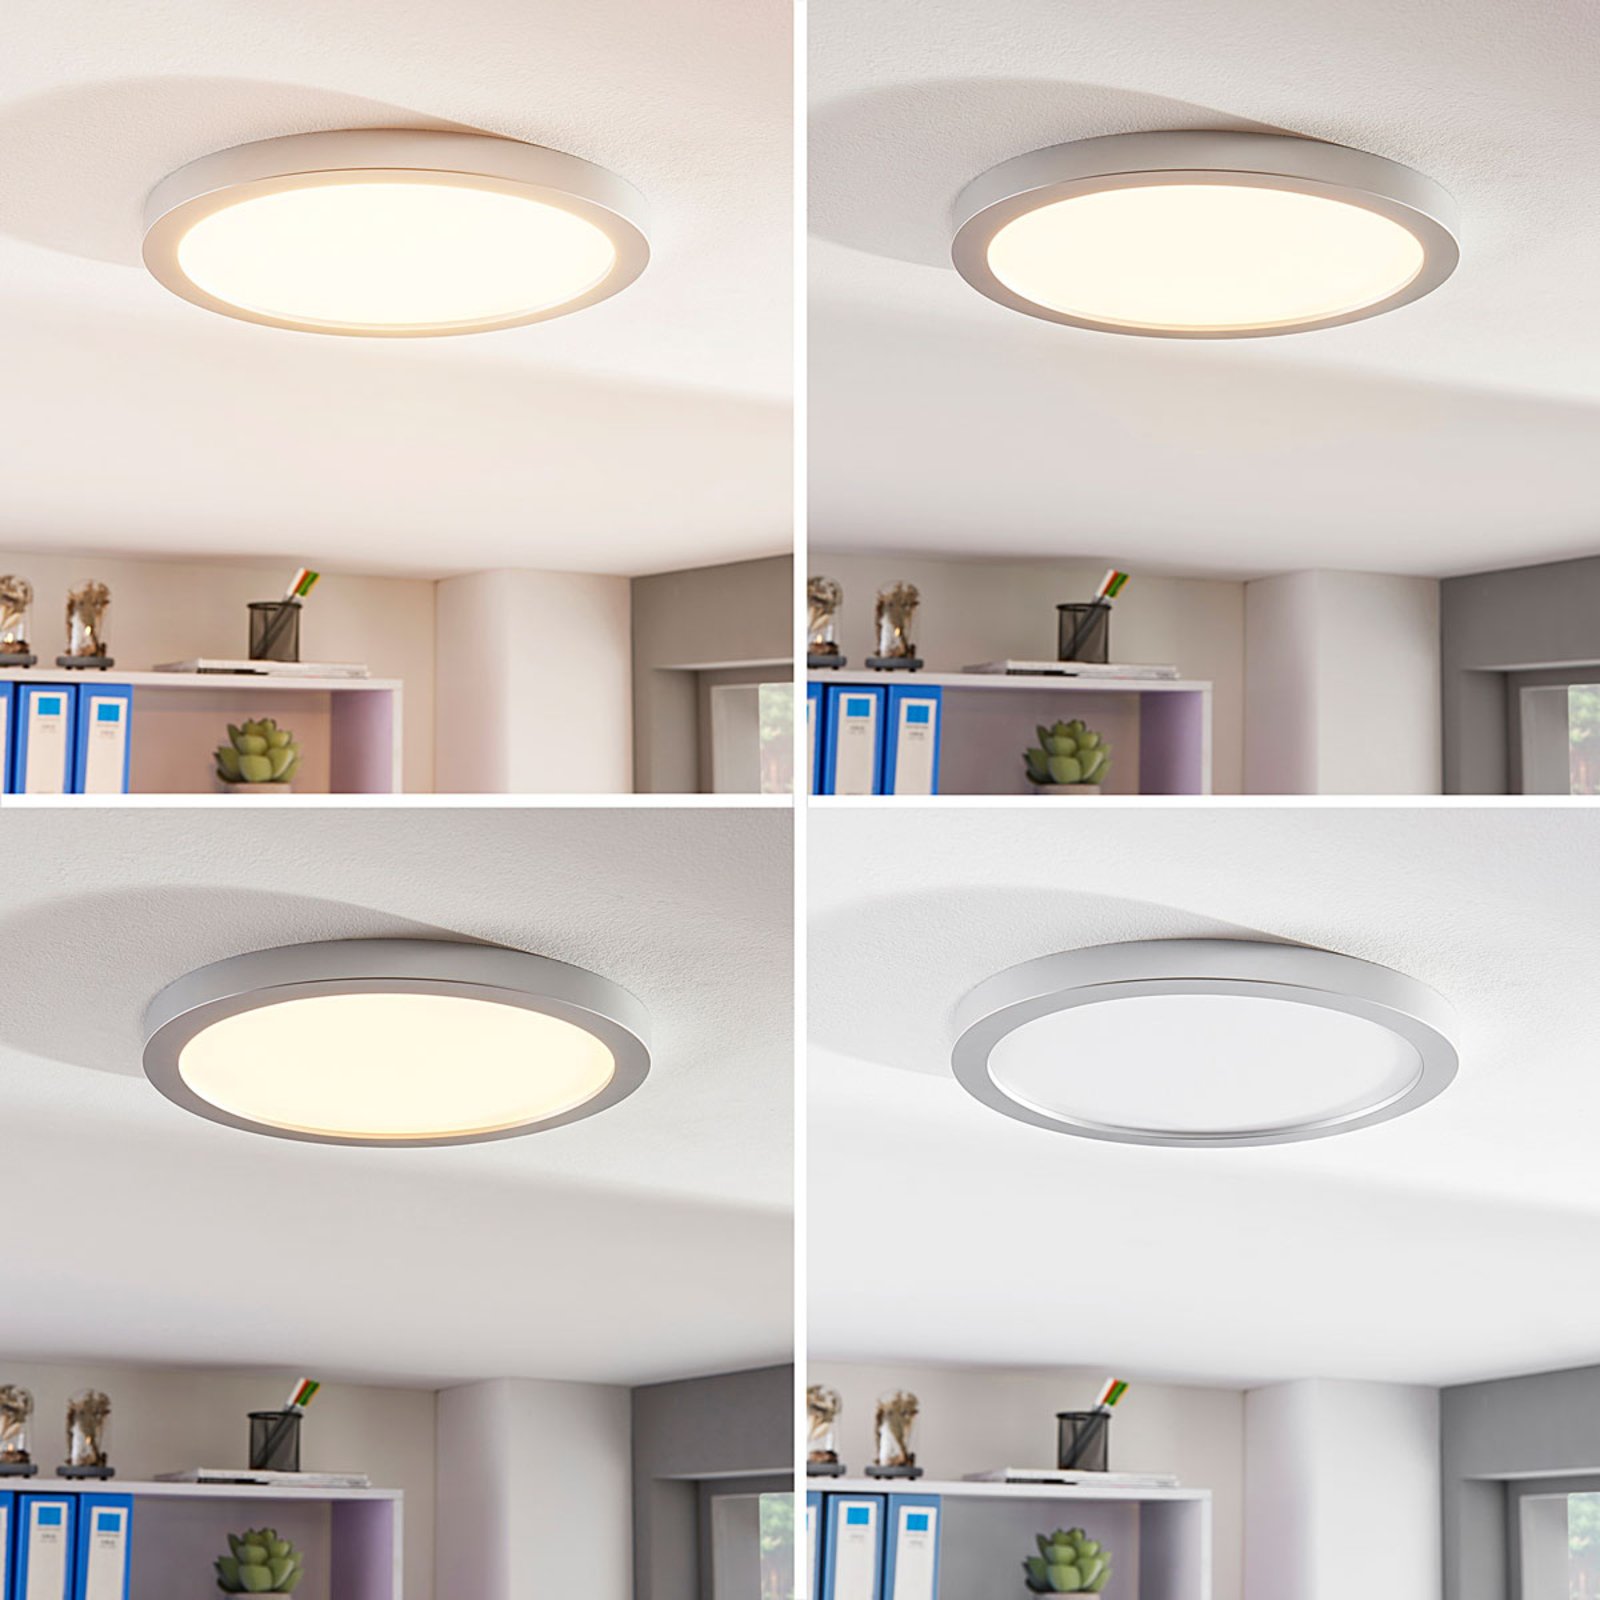 Round LED ceiling light Solvie in silver